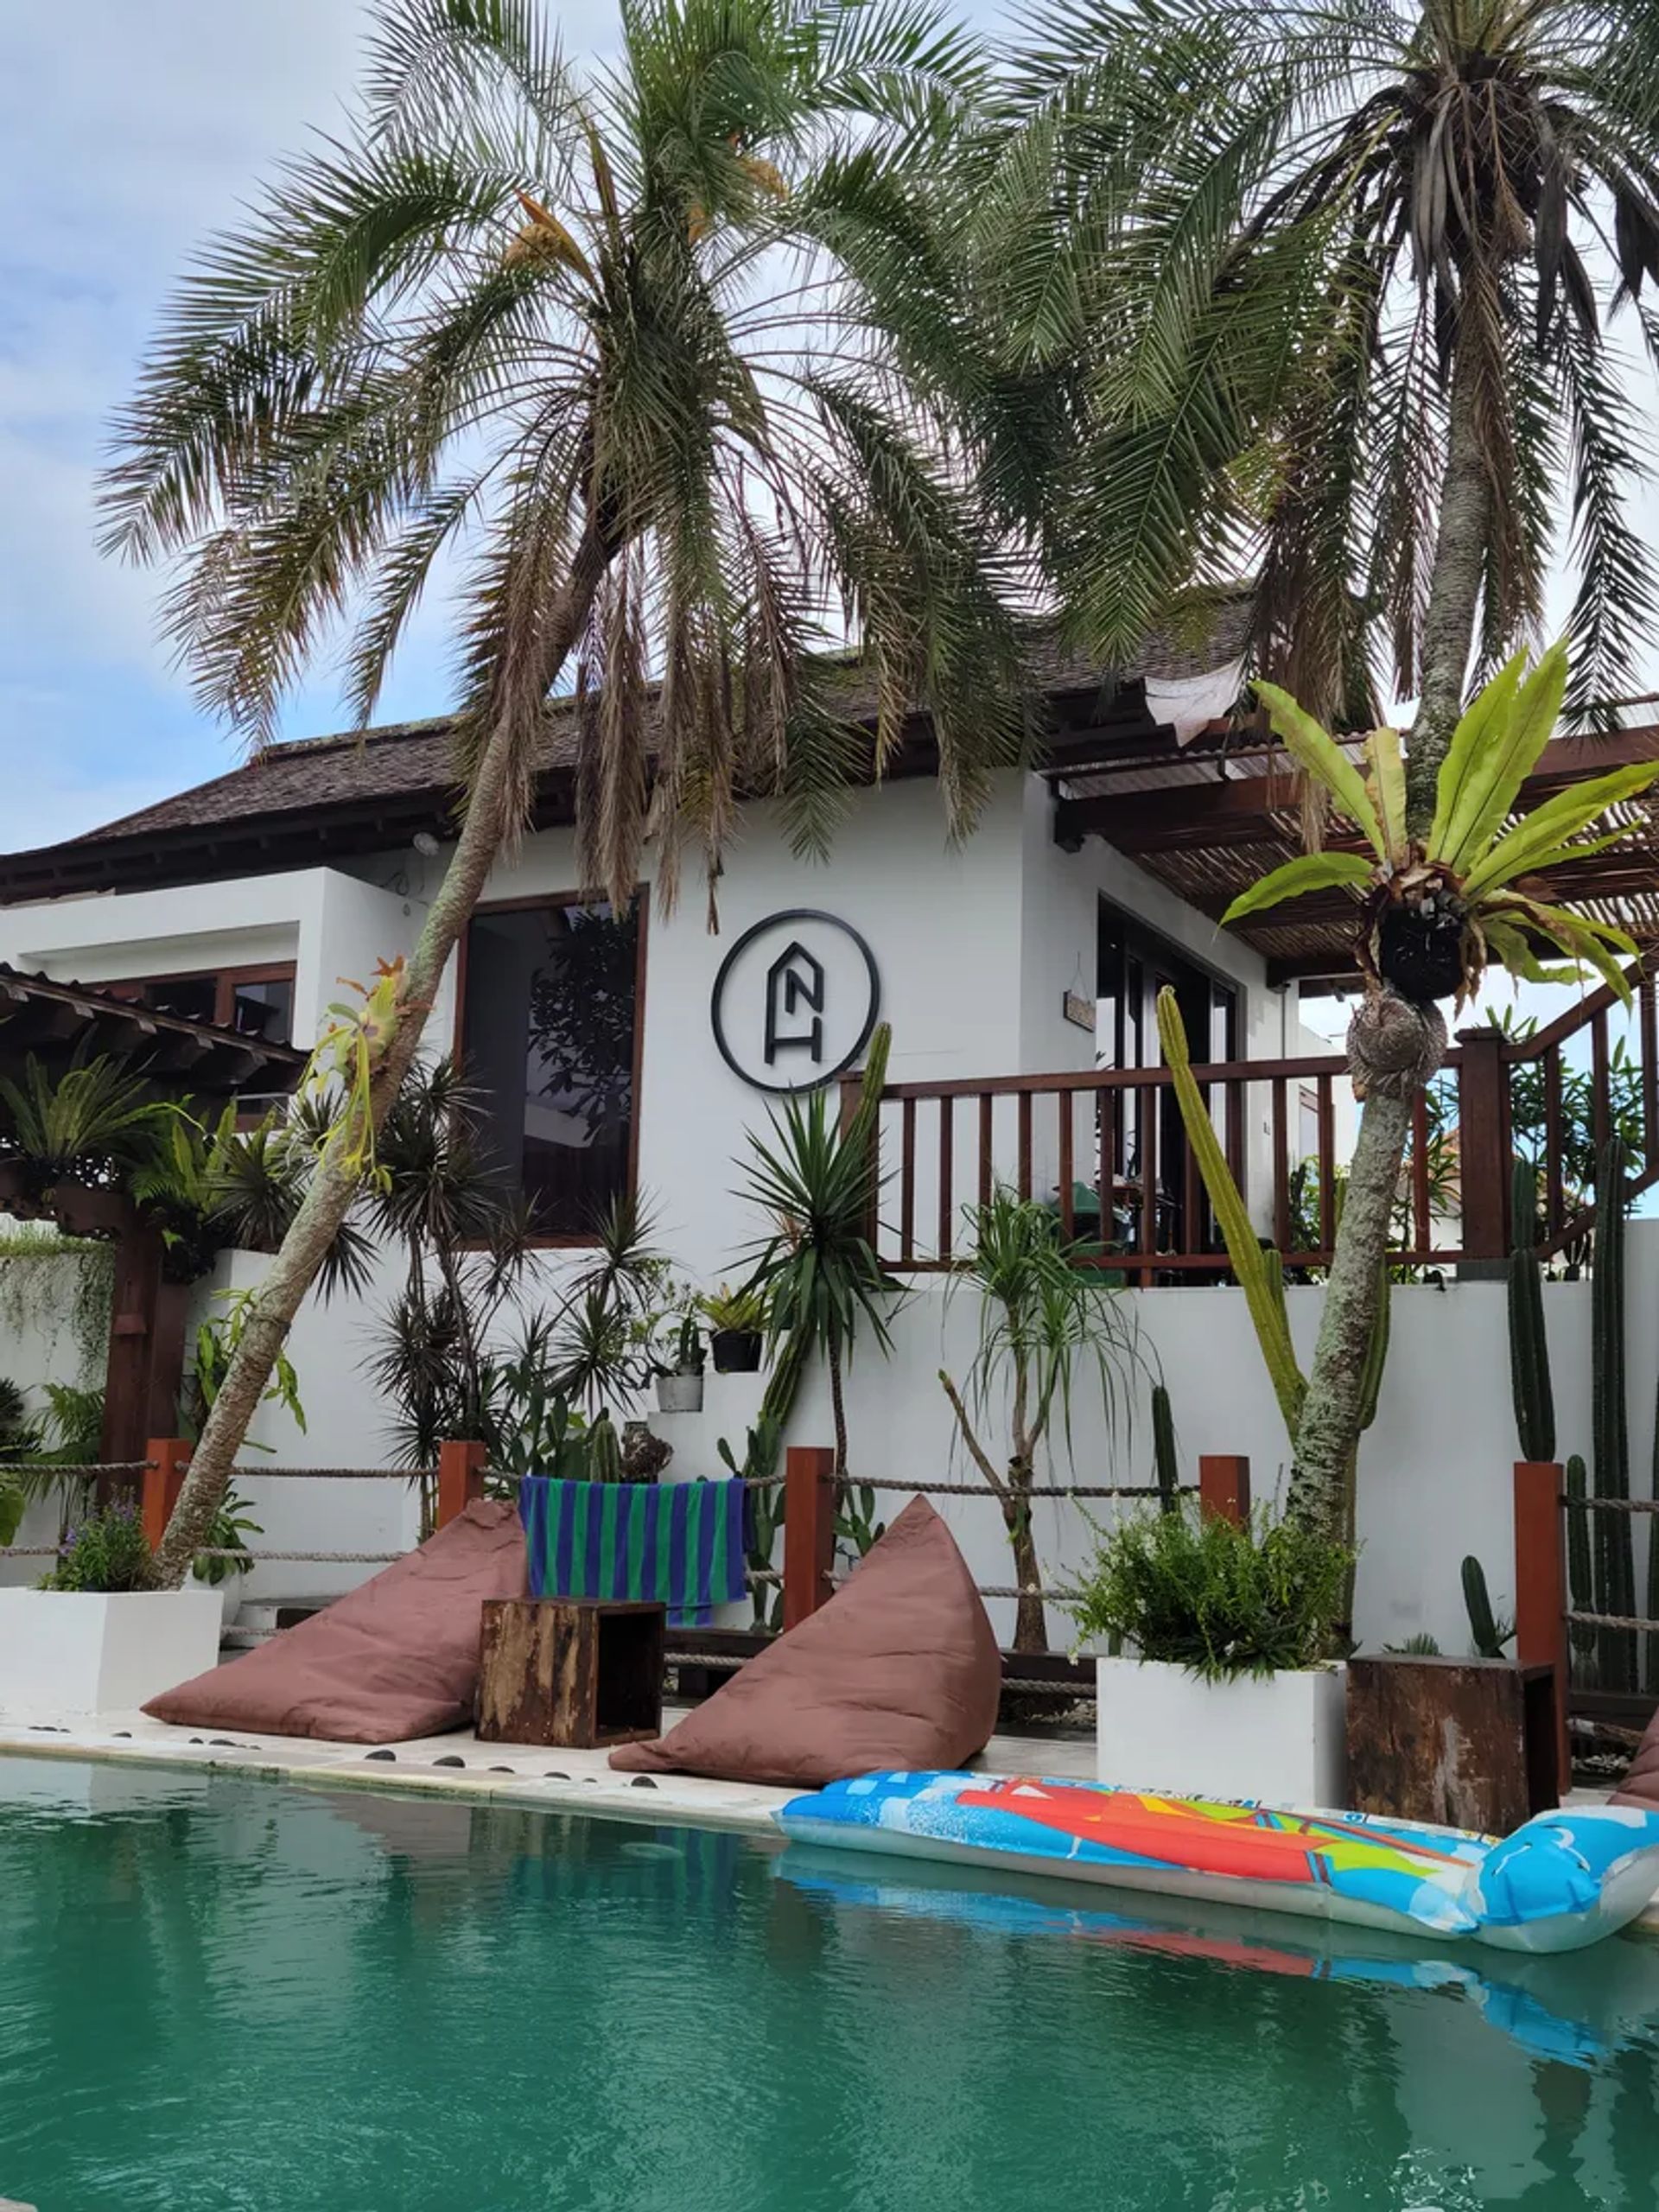 Second Hostel I Visited In Bali